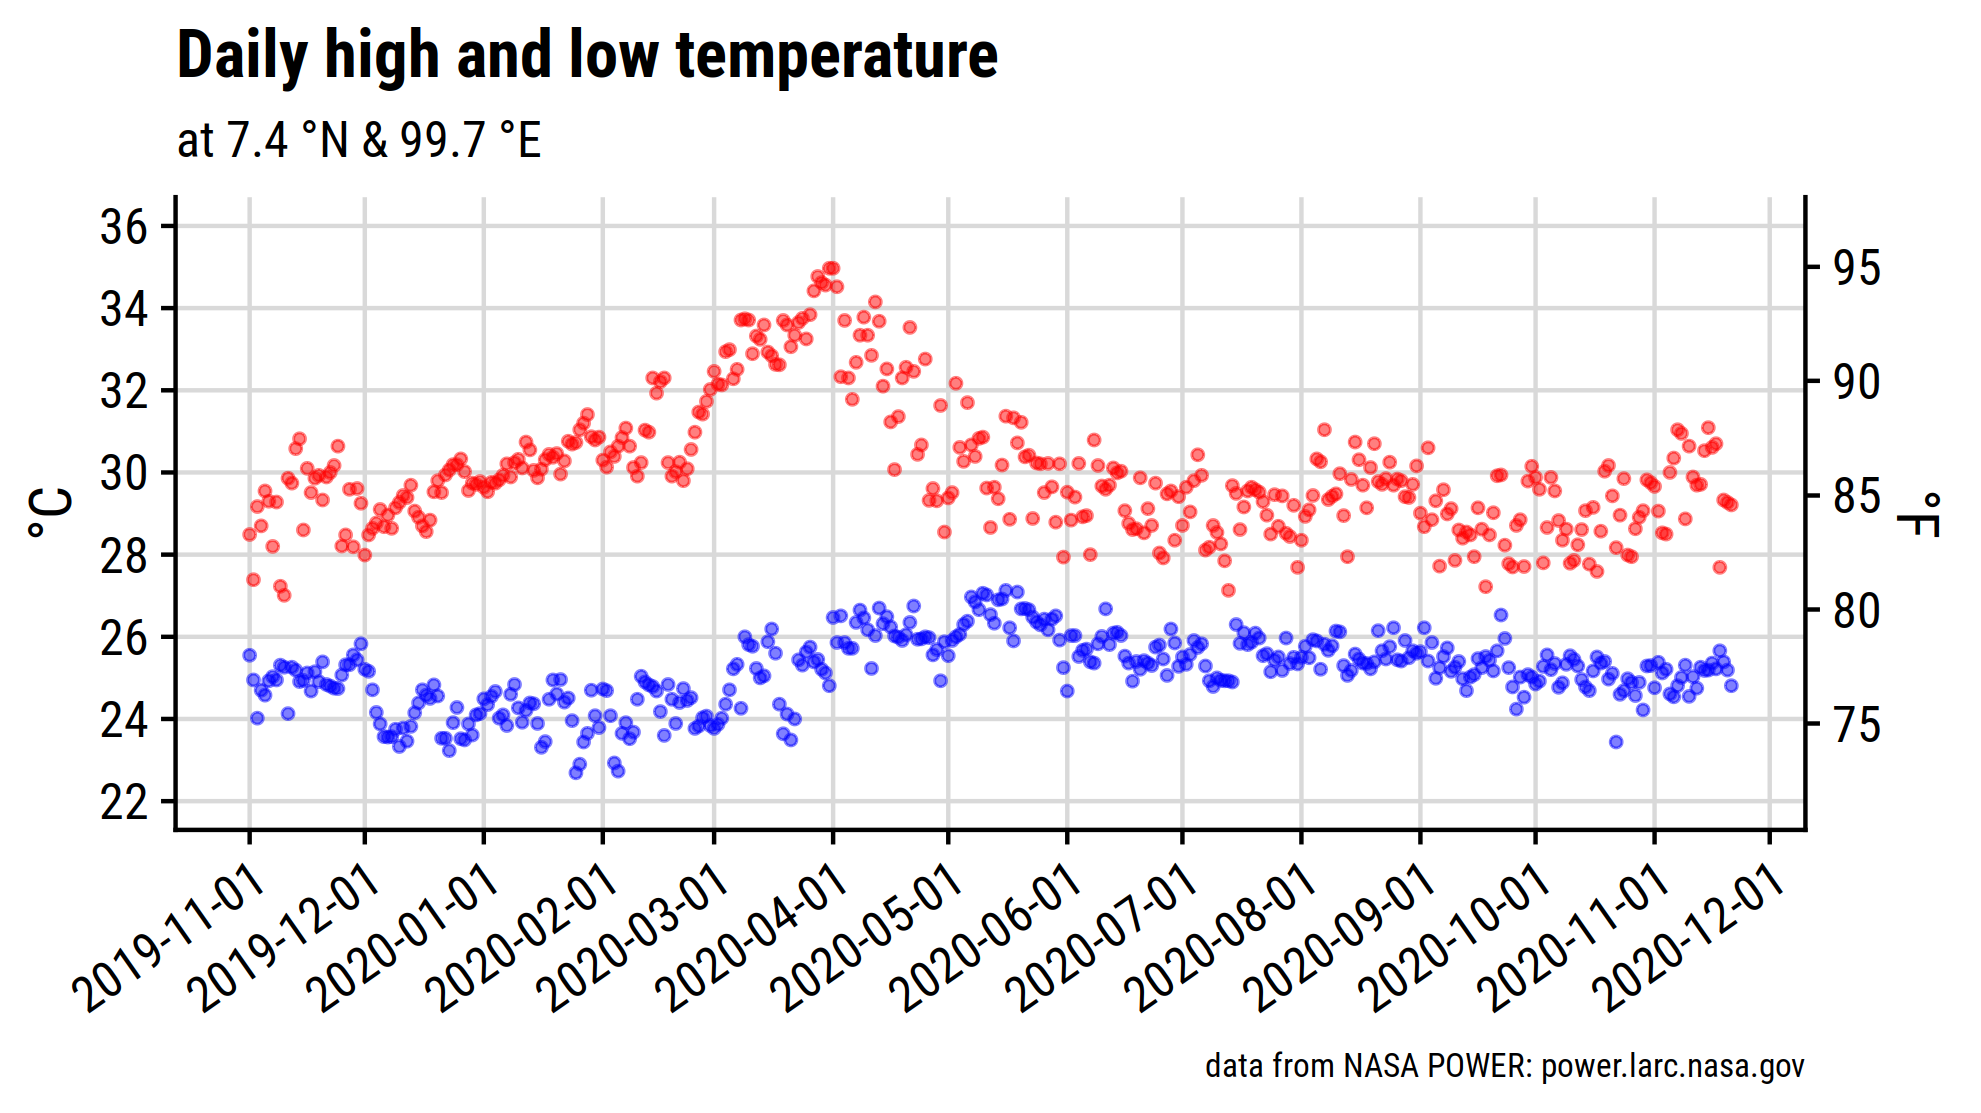 temperatures from NASA POWER data for Trang, Thailand